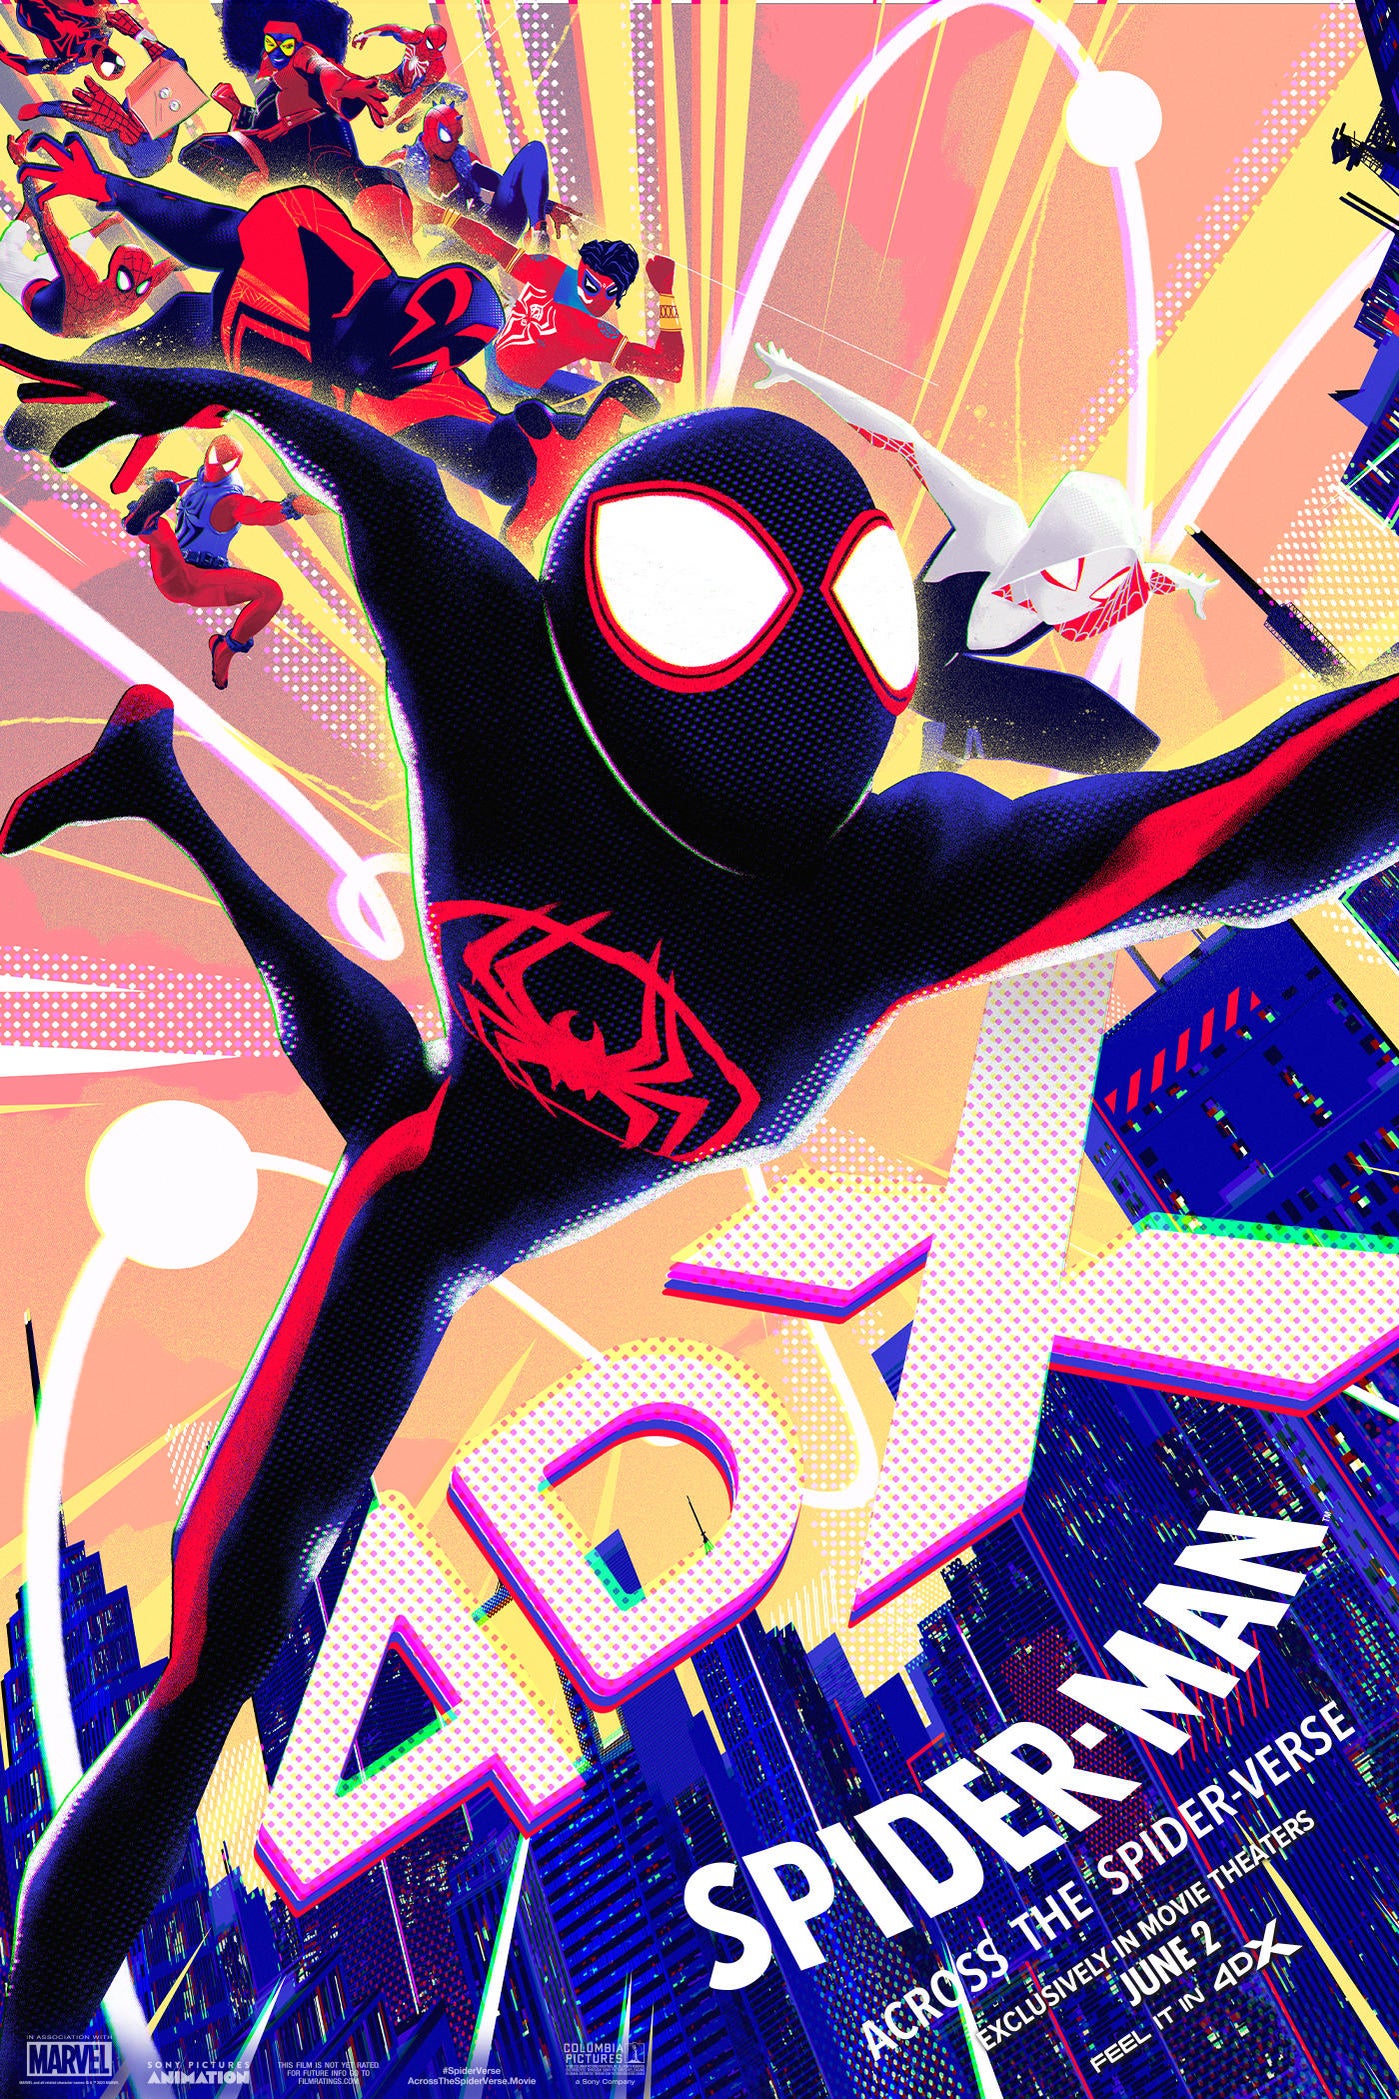 Spider-Man: Across The Spider-Verse Movie Times & Info